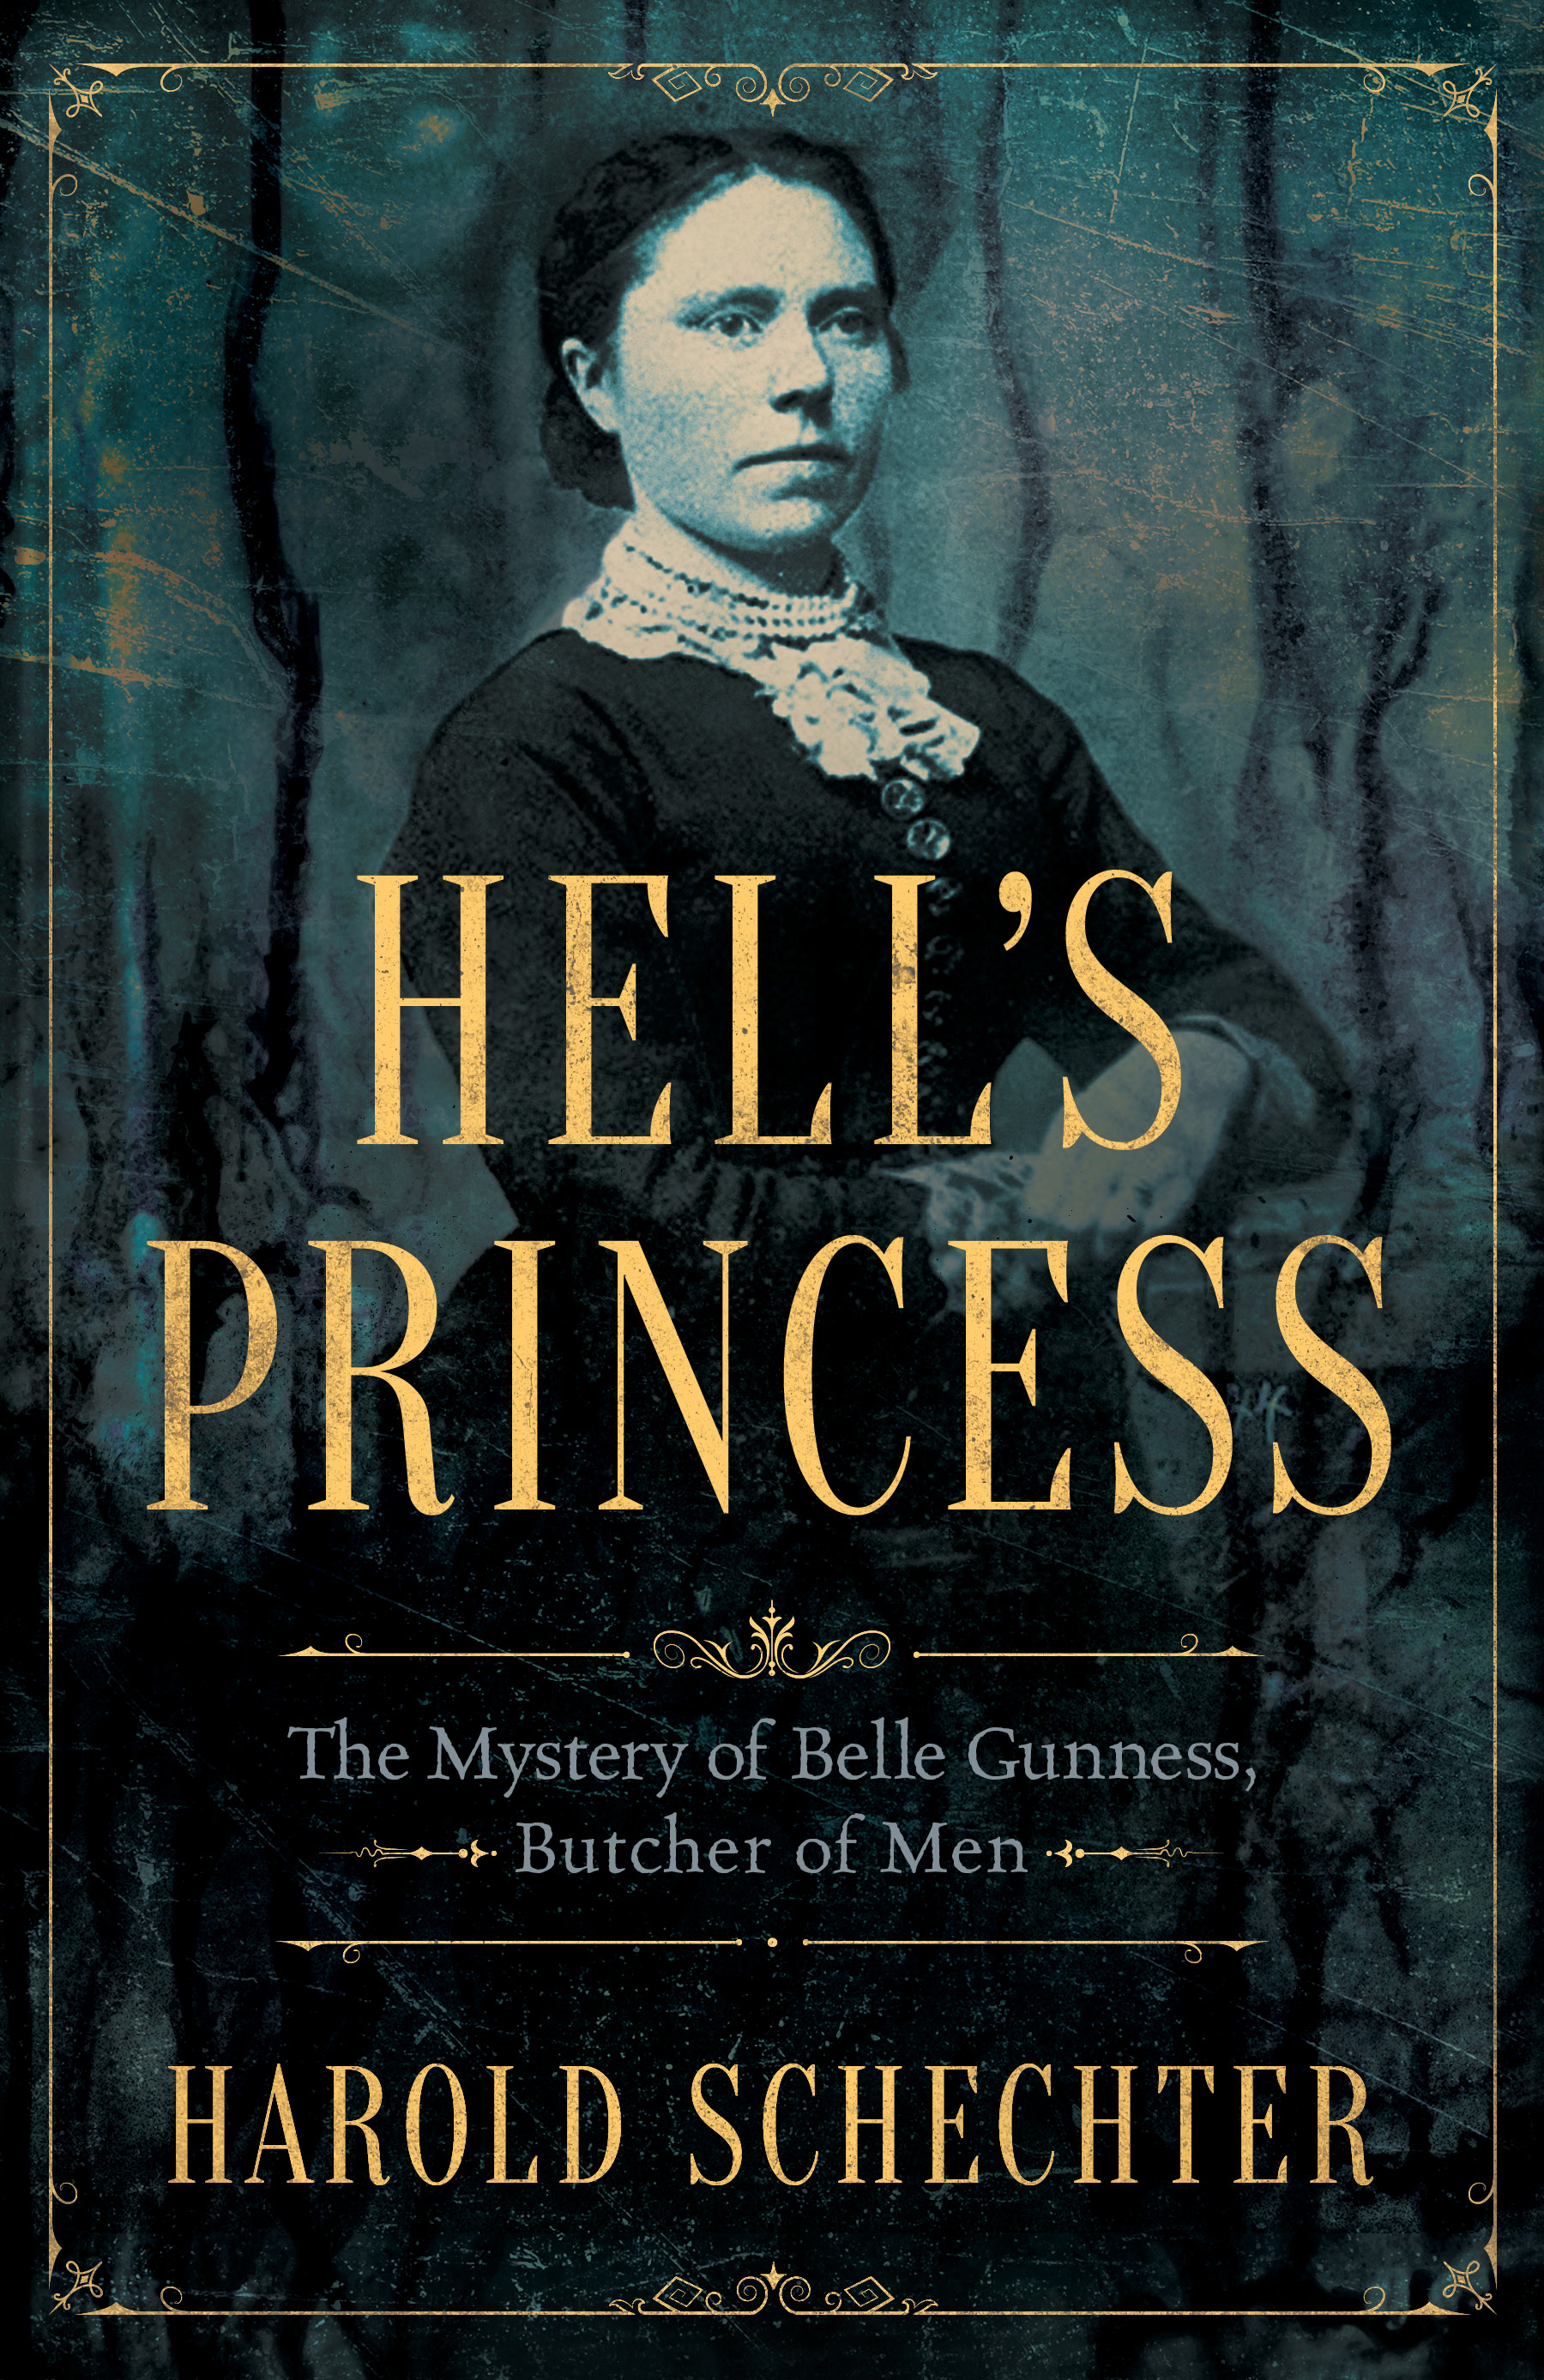 Book Launch: Hell's Princess by Harold Schechter